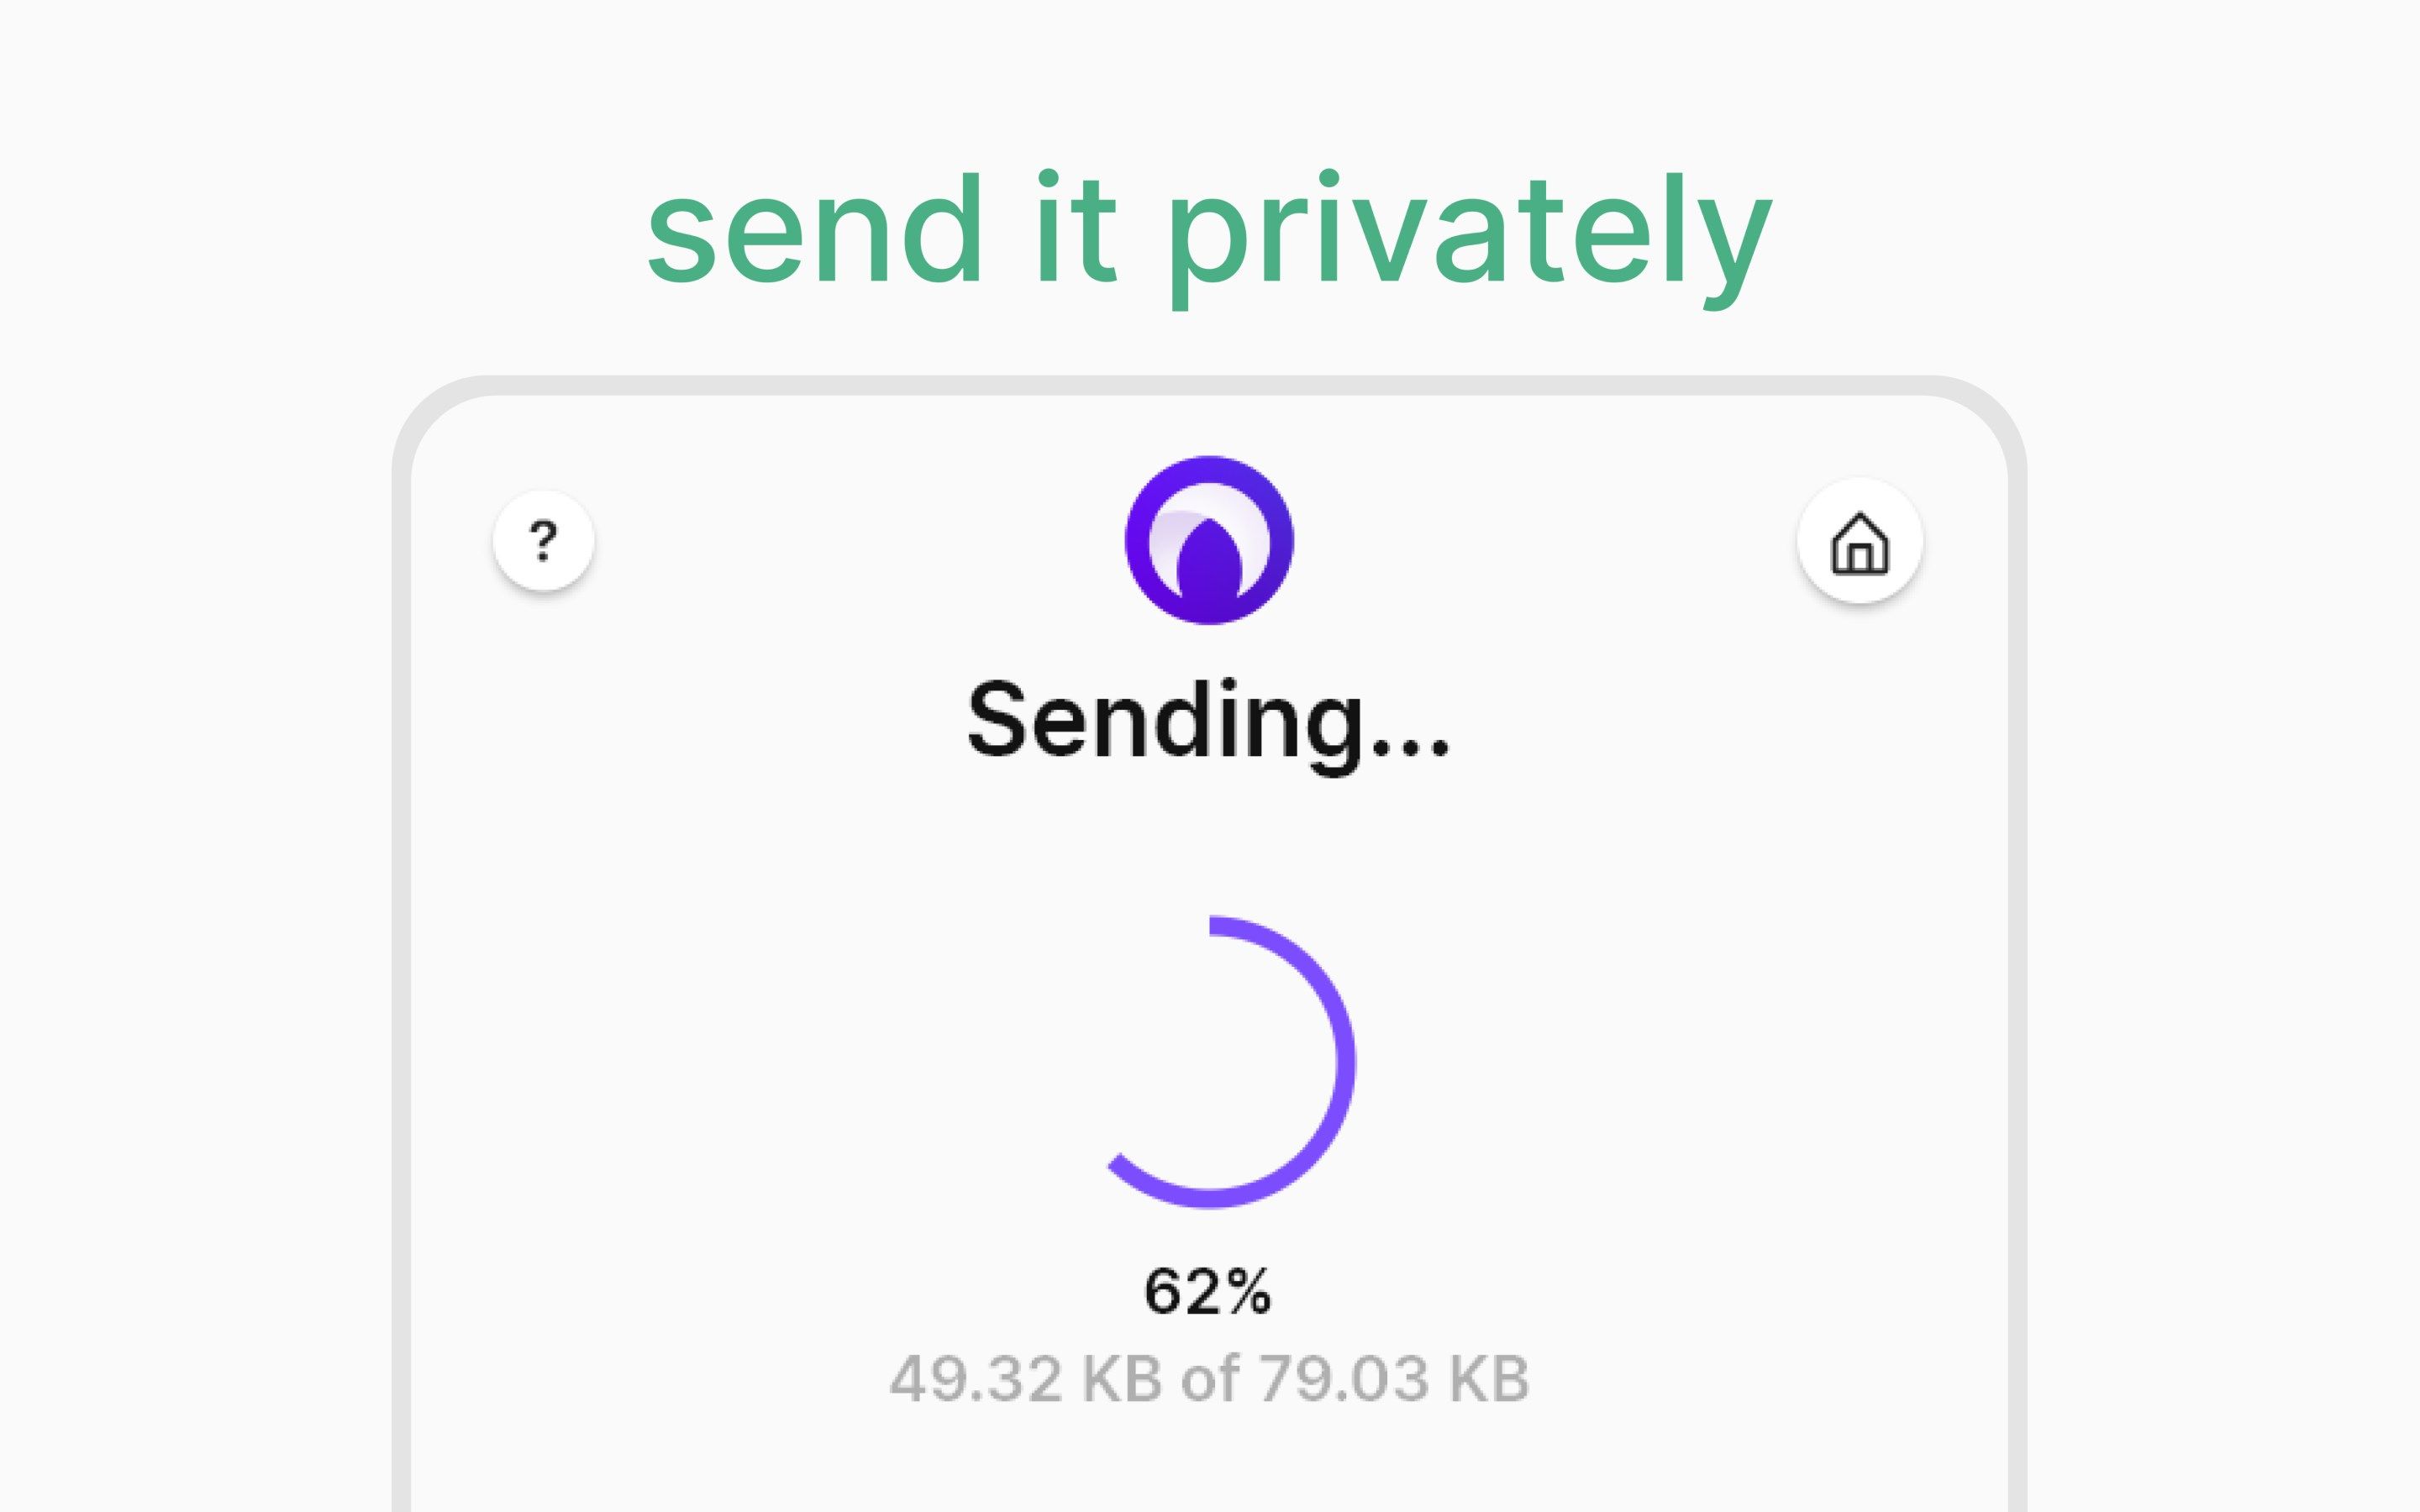 send it privately